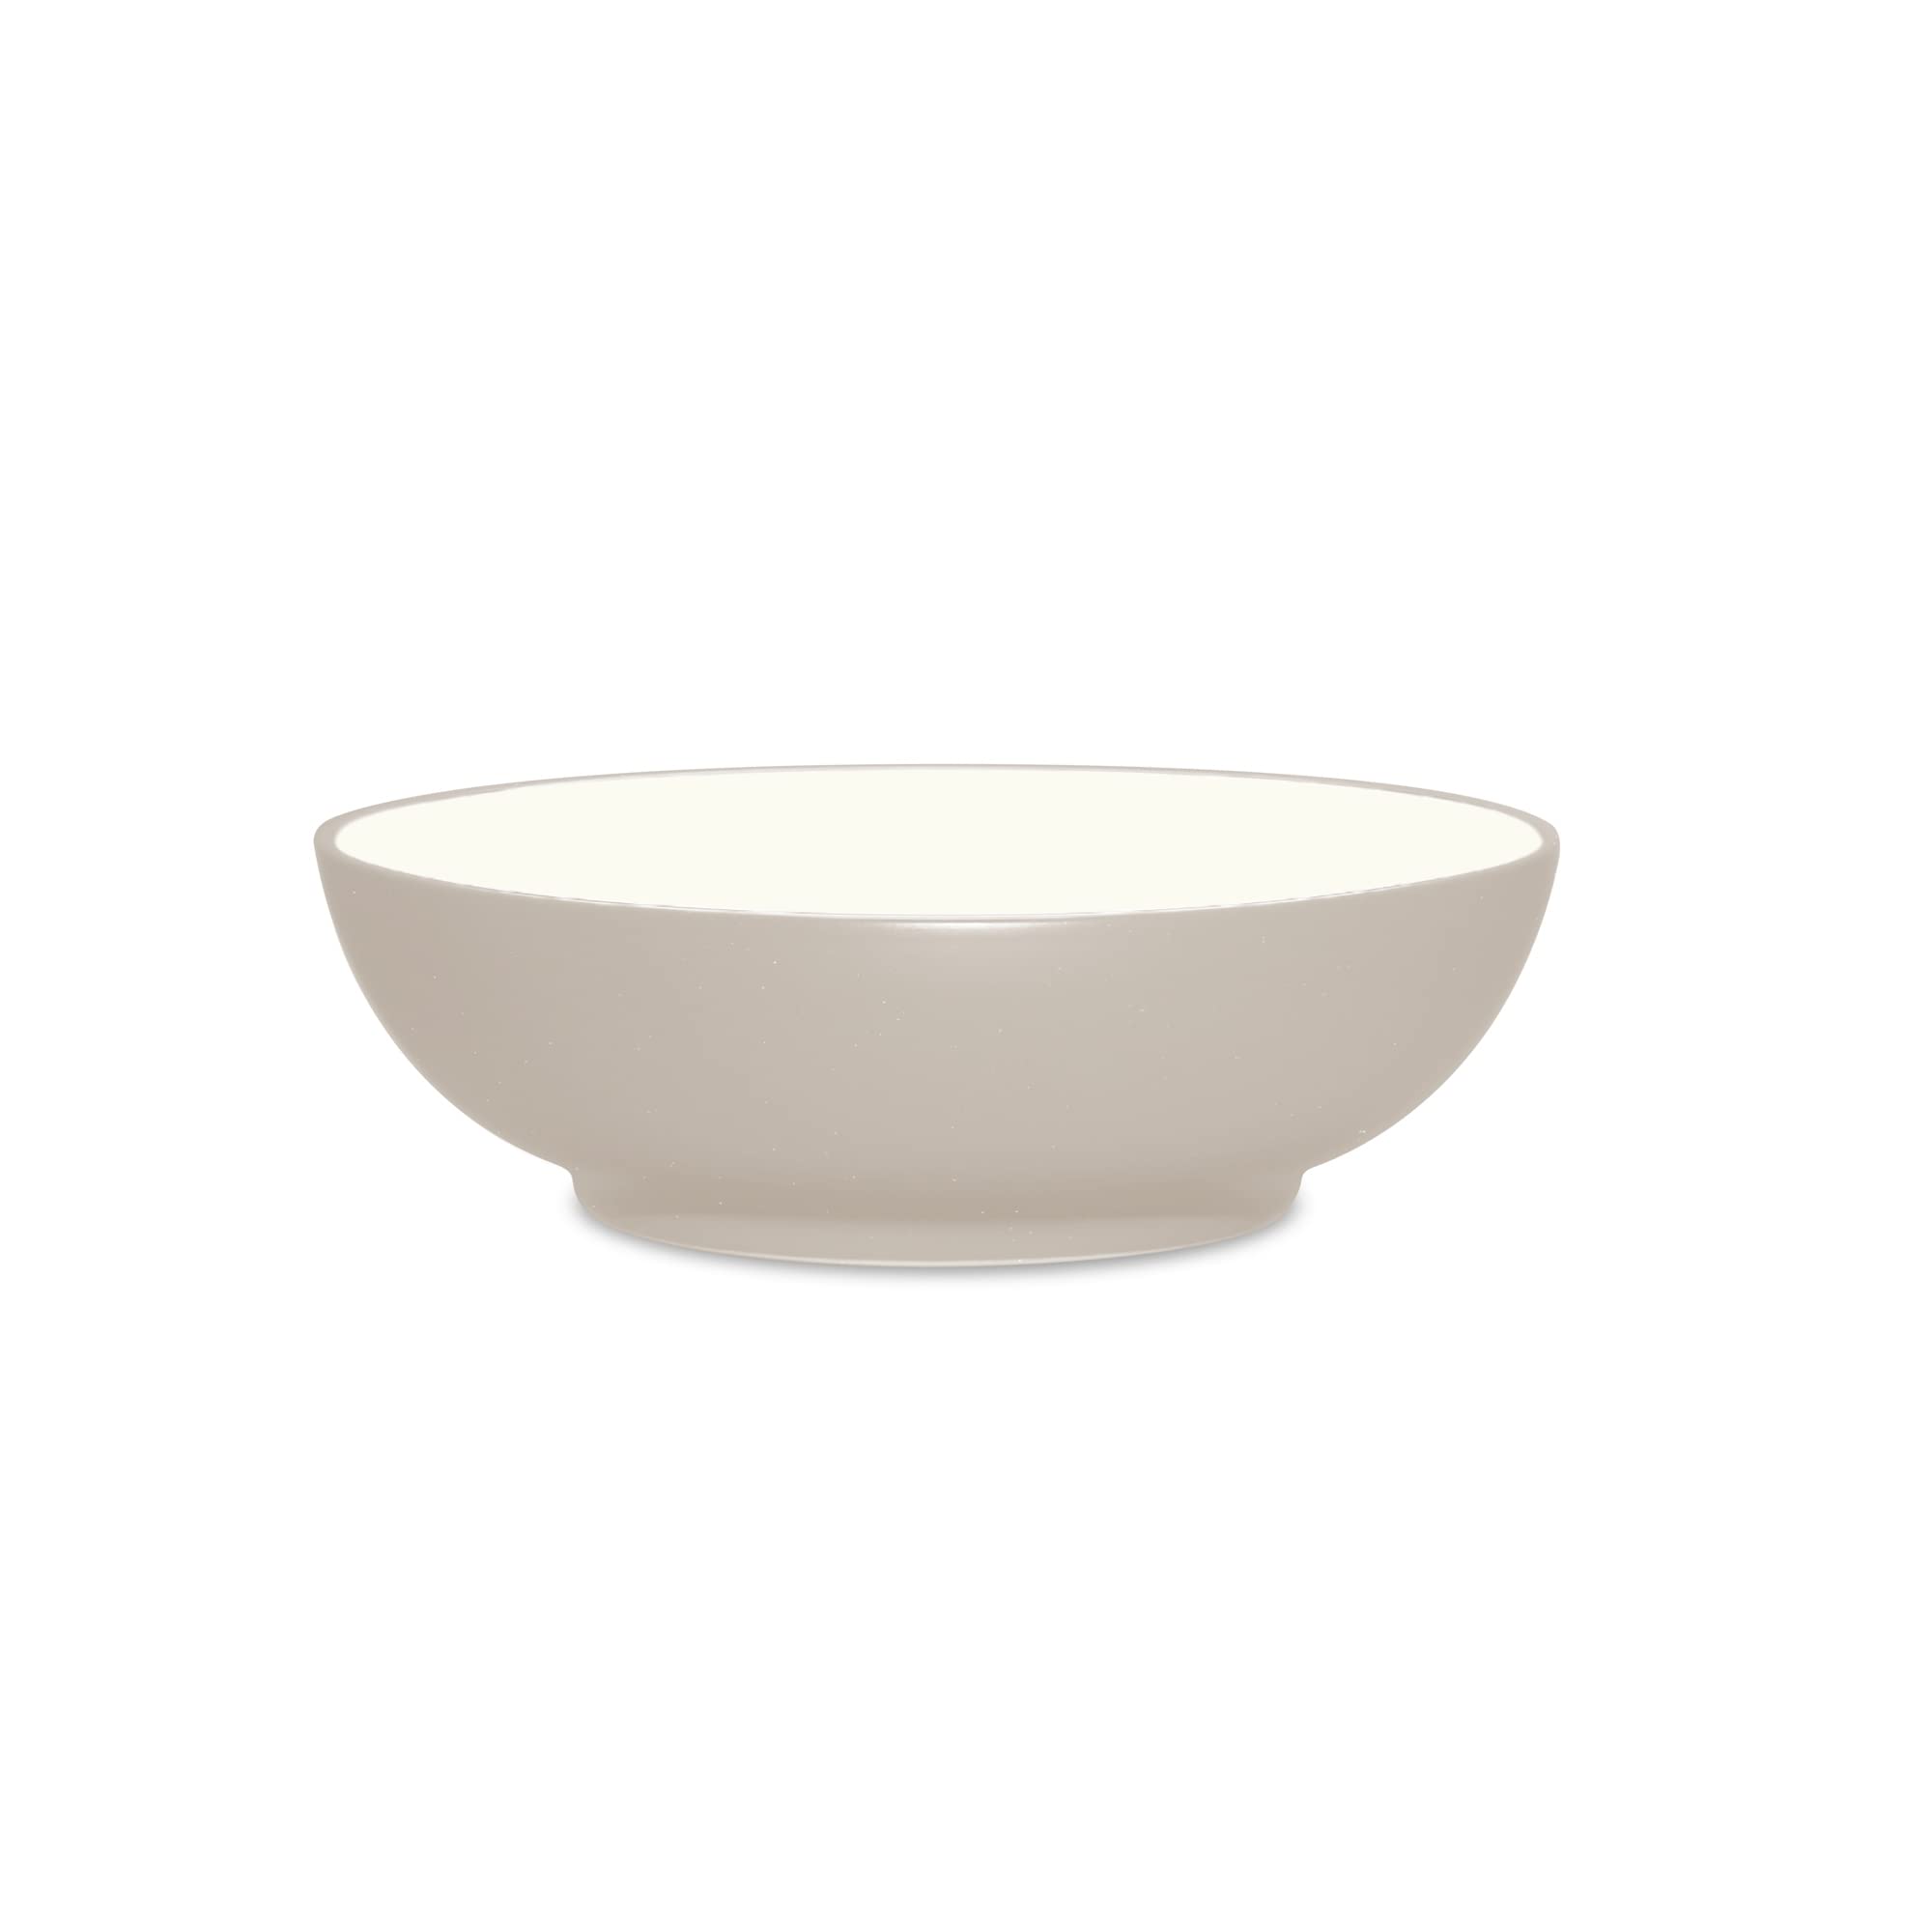 Noritake Colorwave Sand Bowl, Soup/Cereal, 7", 27 oz., Set of 4 in Cream/Sand